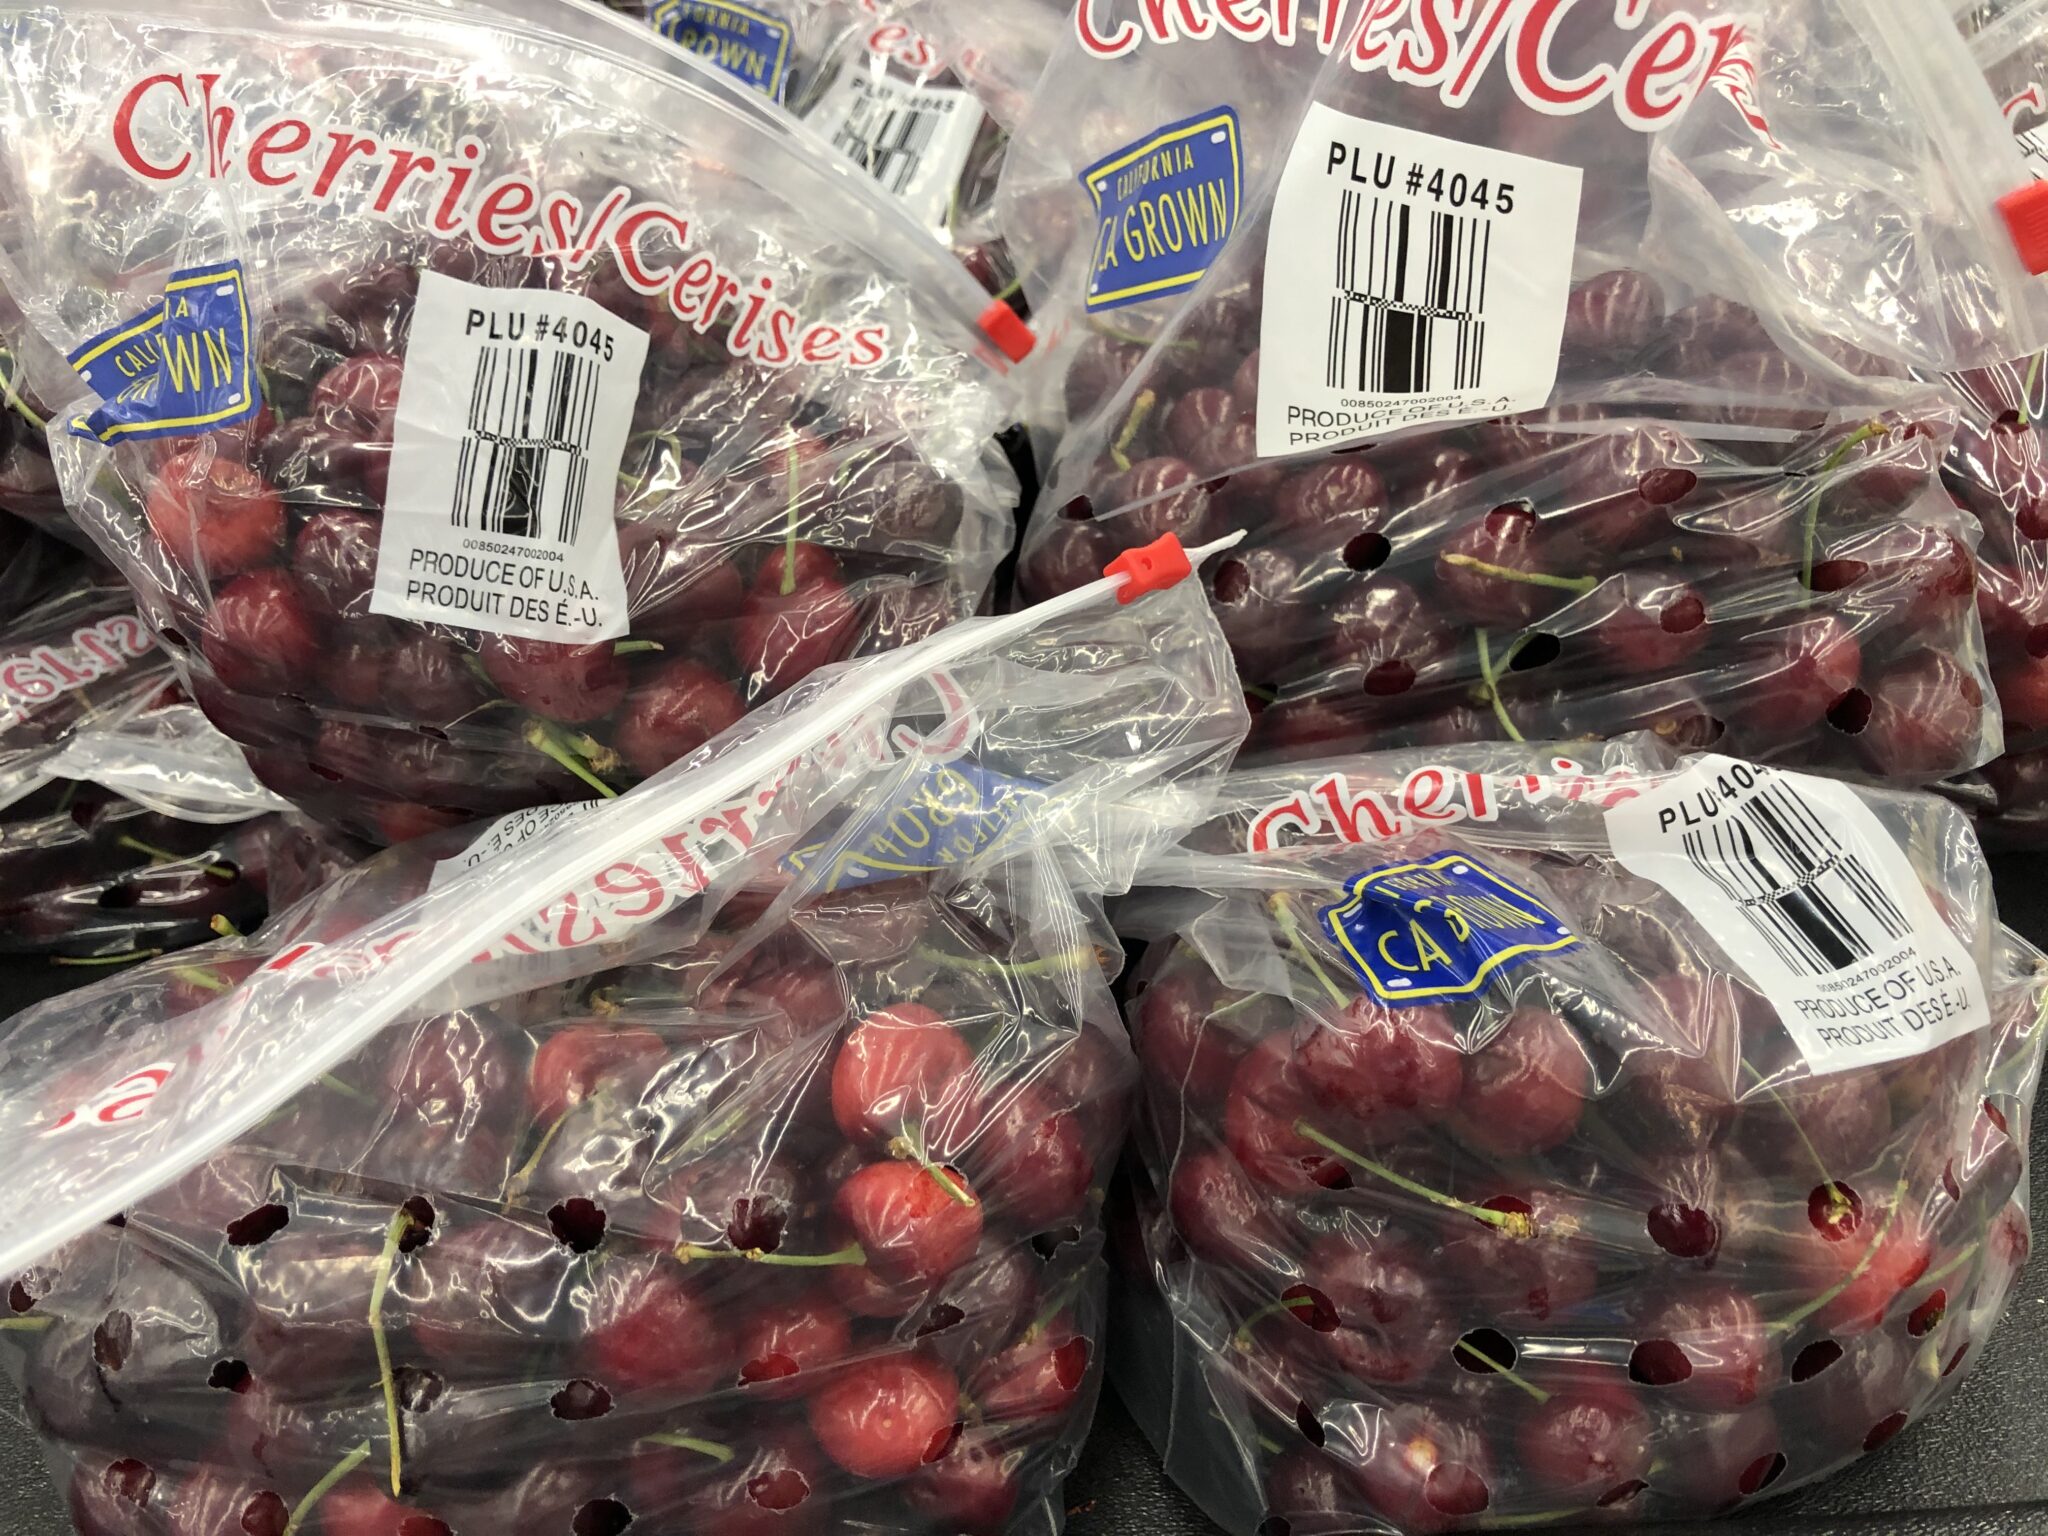 Giant: Fresh Sweet Cherries Just $2.47 Lb Starting 7/1!